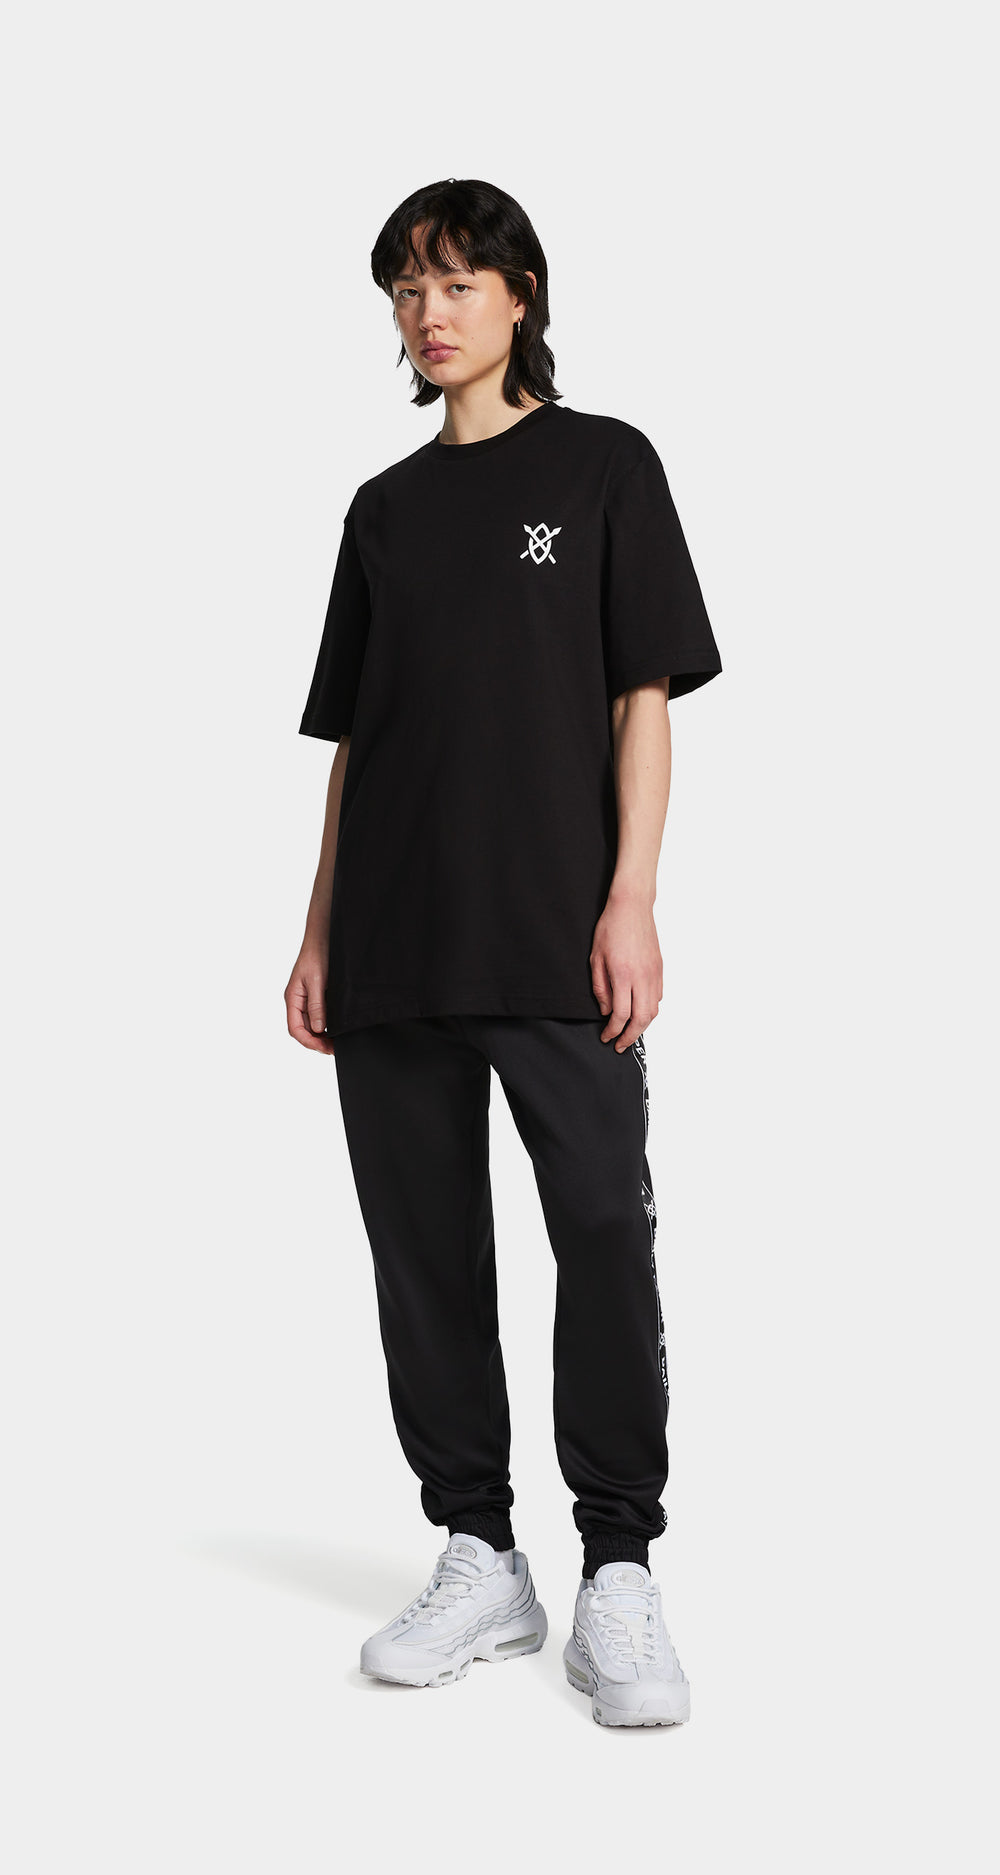 DP - Black White London Flagship Store T-Shirt - Wmn - Front